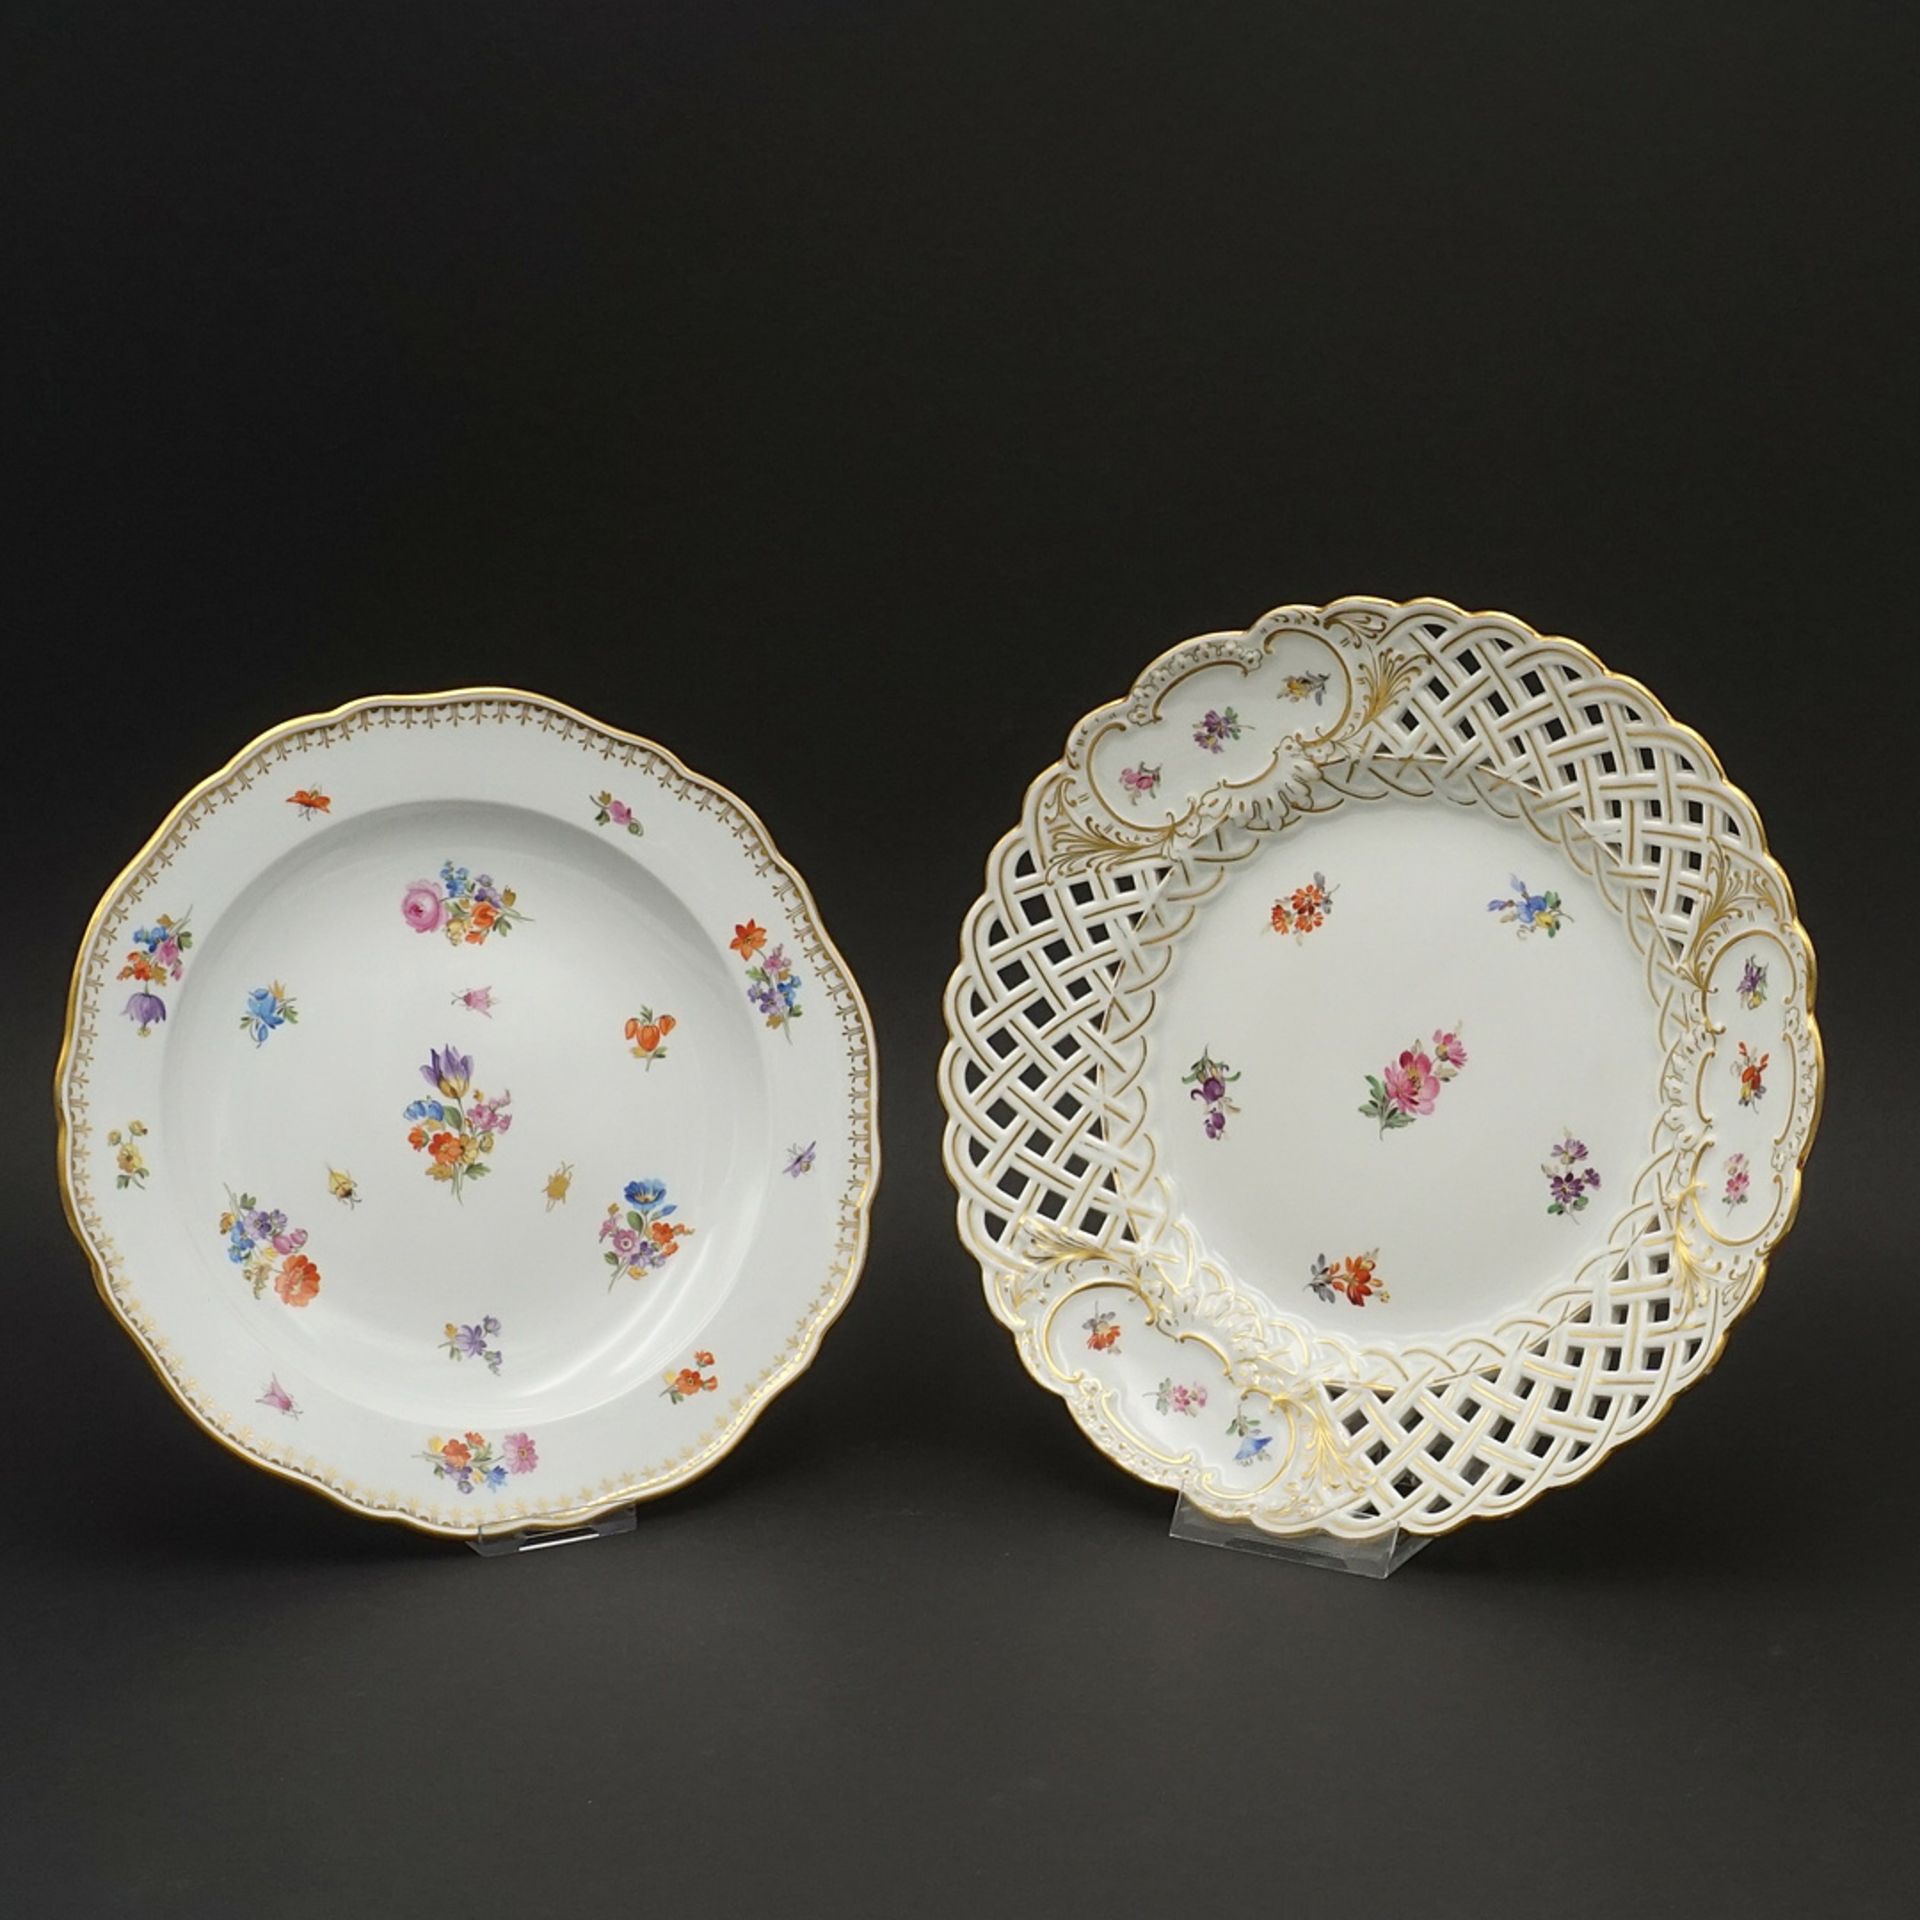 Two Meissen plates